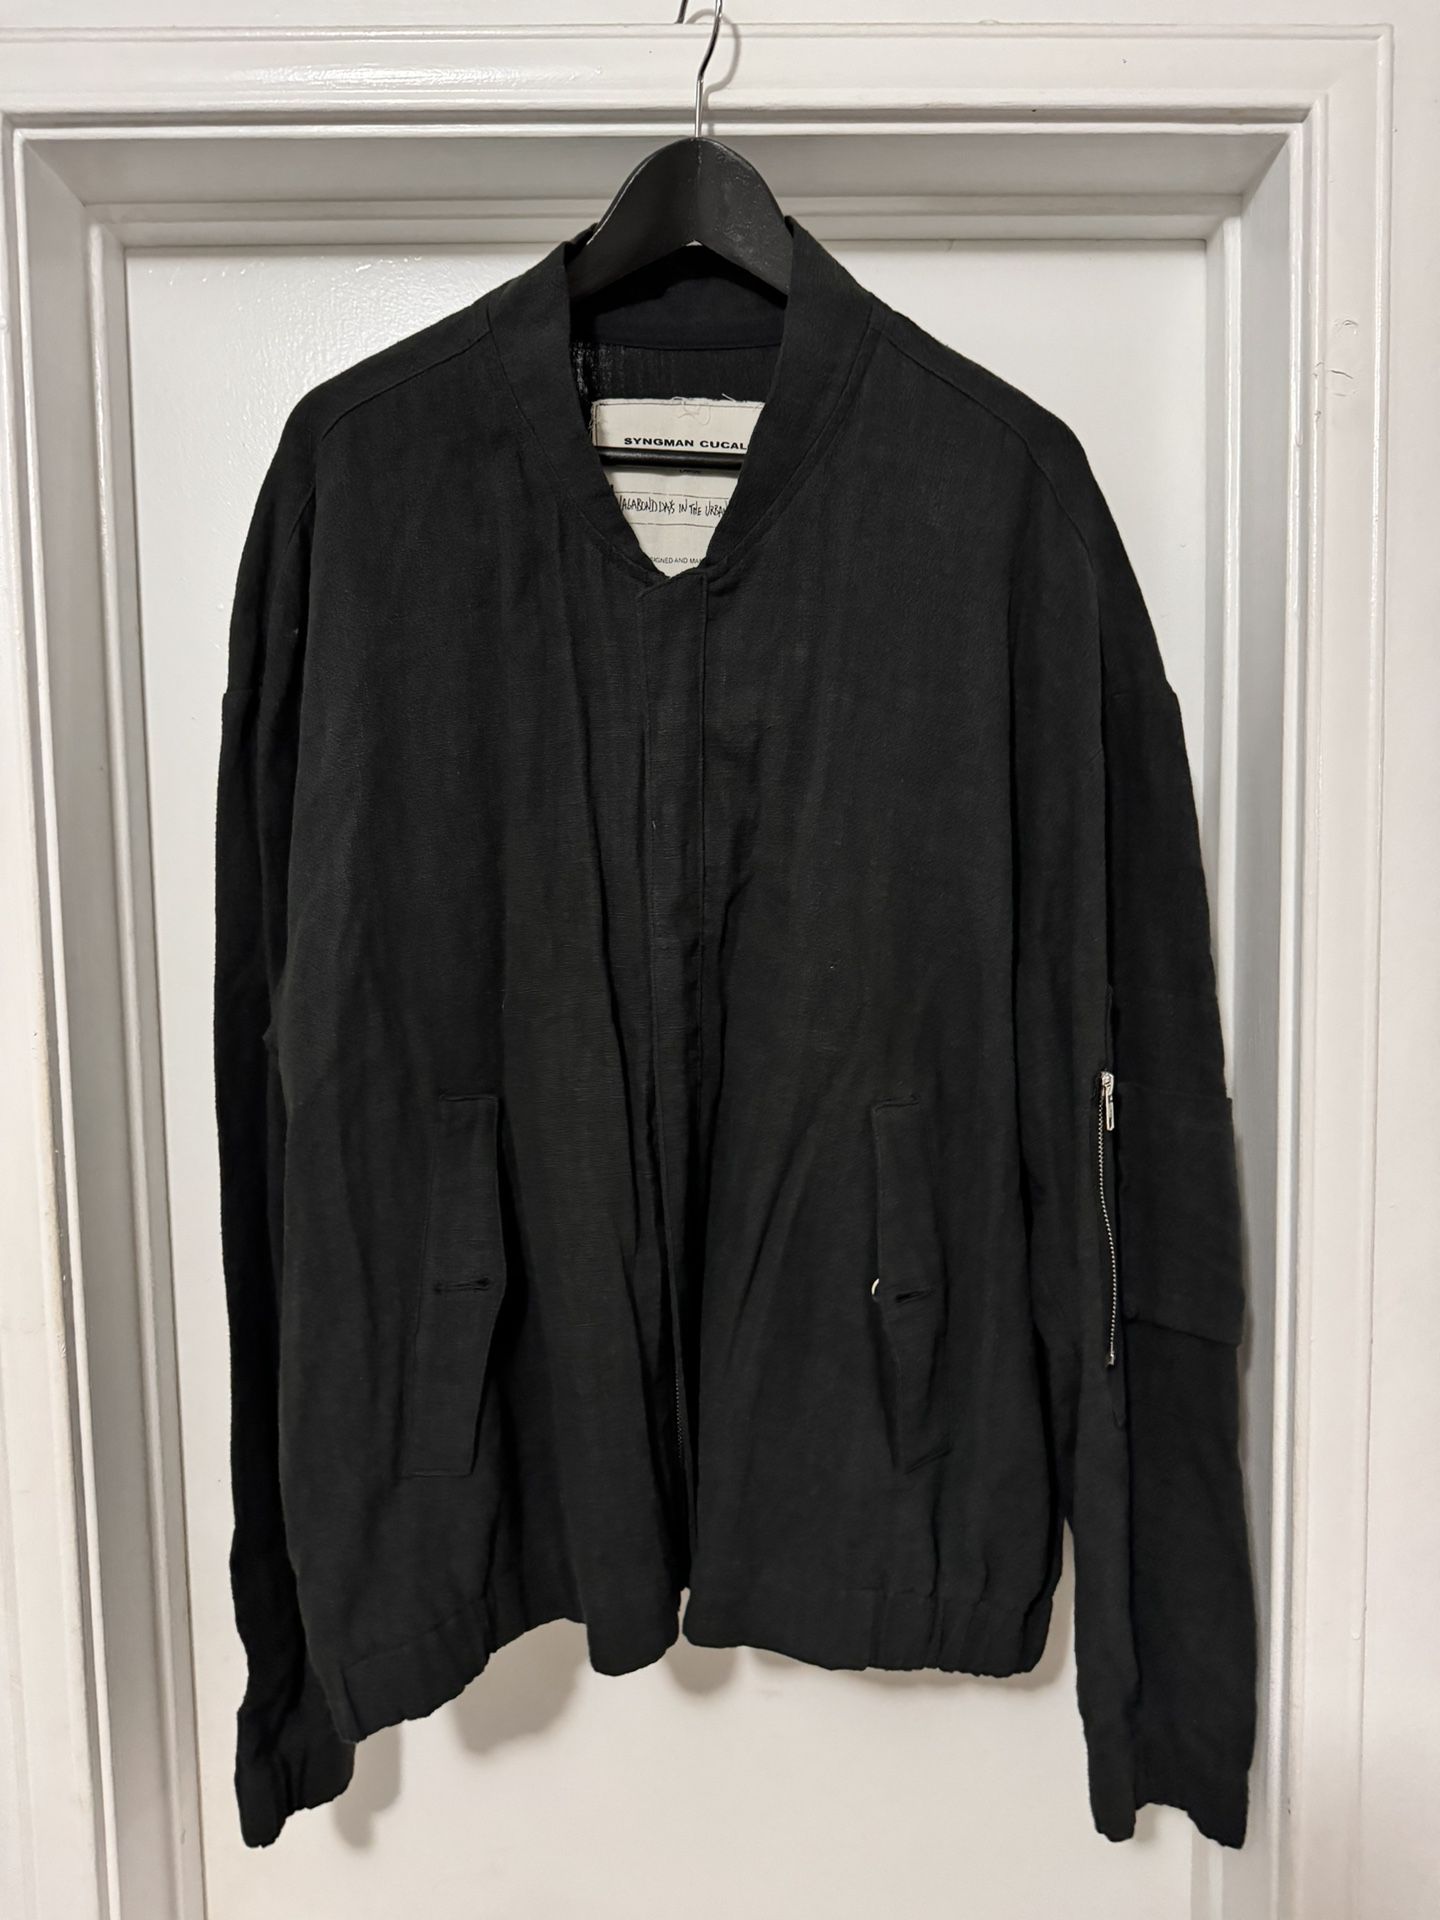 Syngman Cucala (Spain Brand) Jacket Size Large